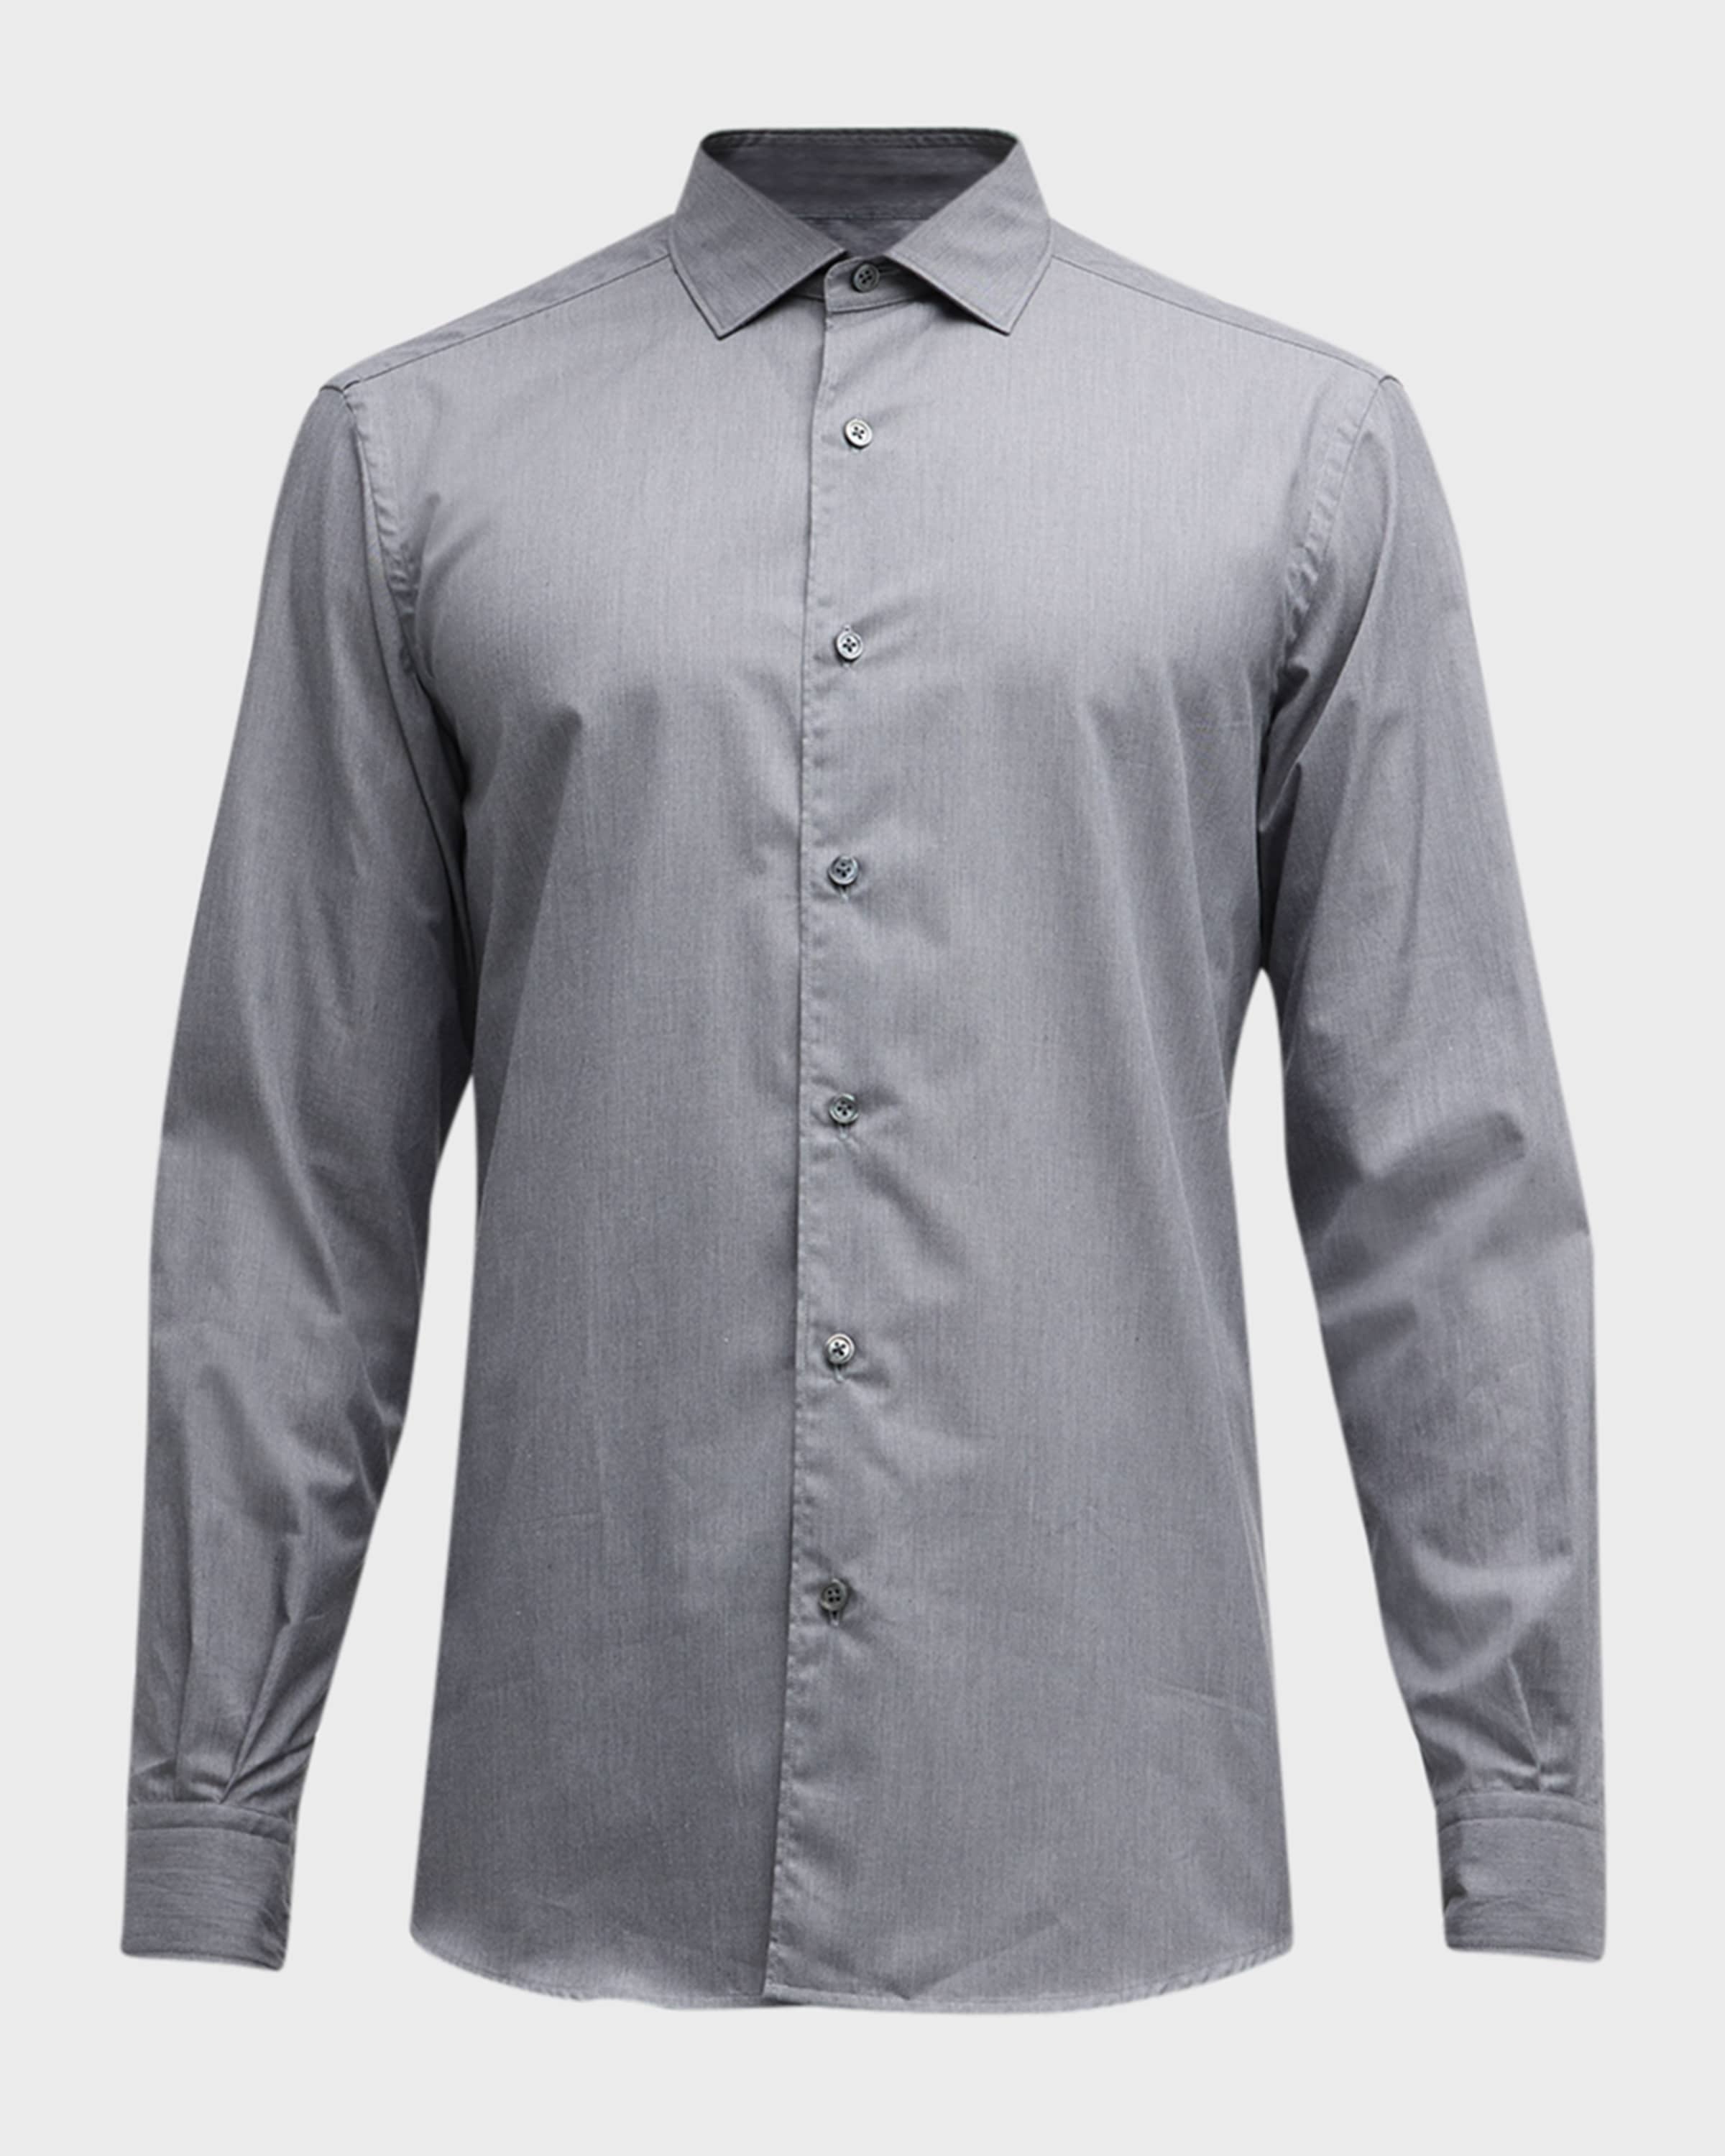 Men's Premium Cotton Sport Shirt - 1